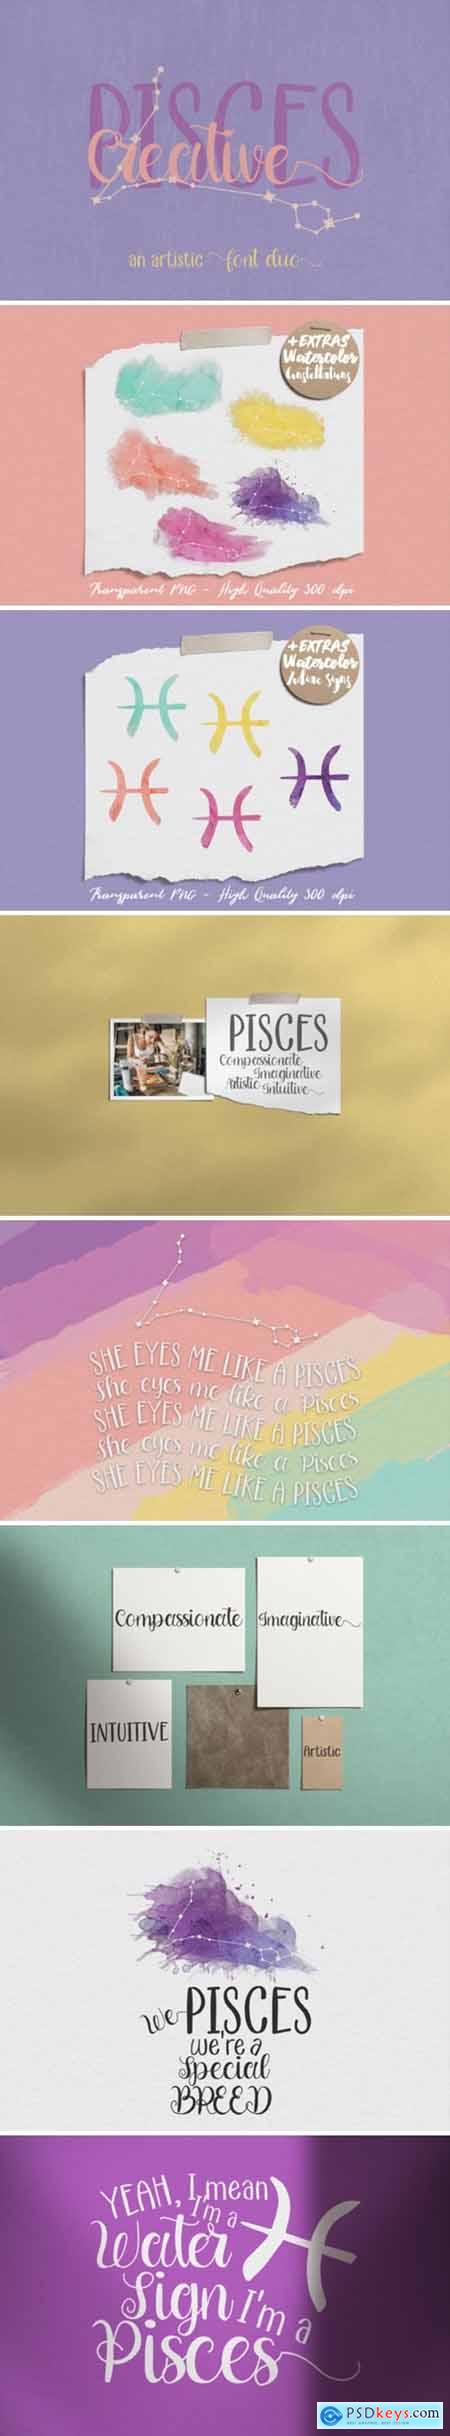 Creative Pisces Duo Font